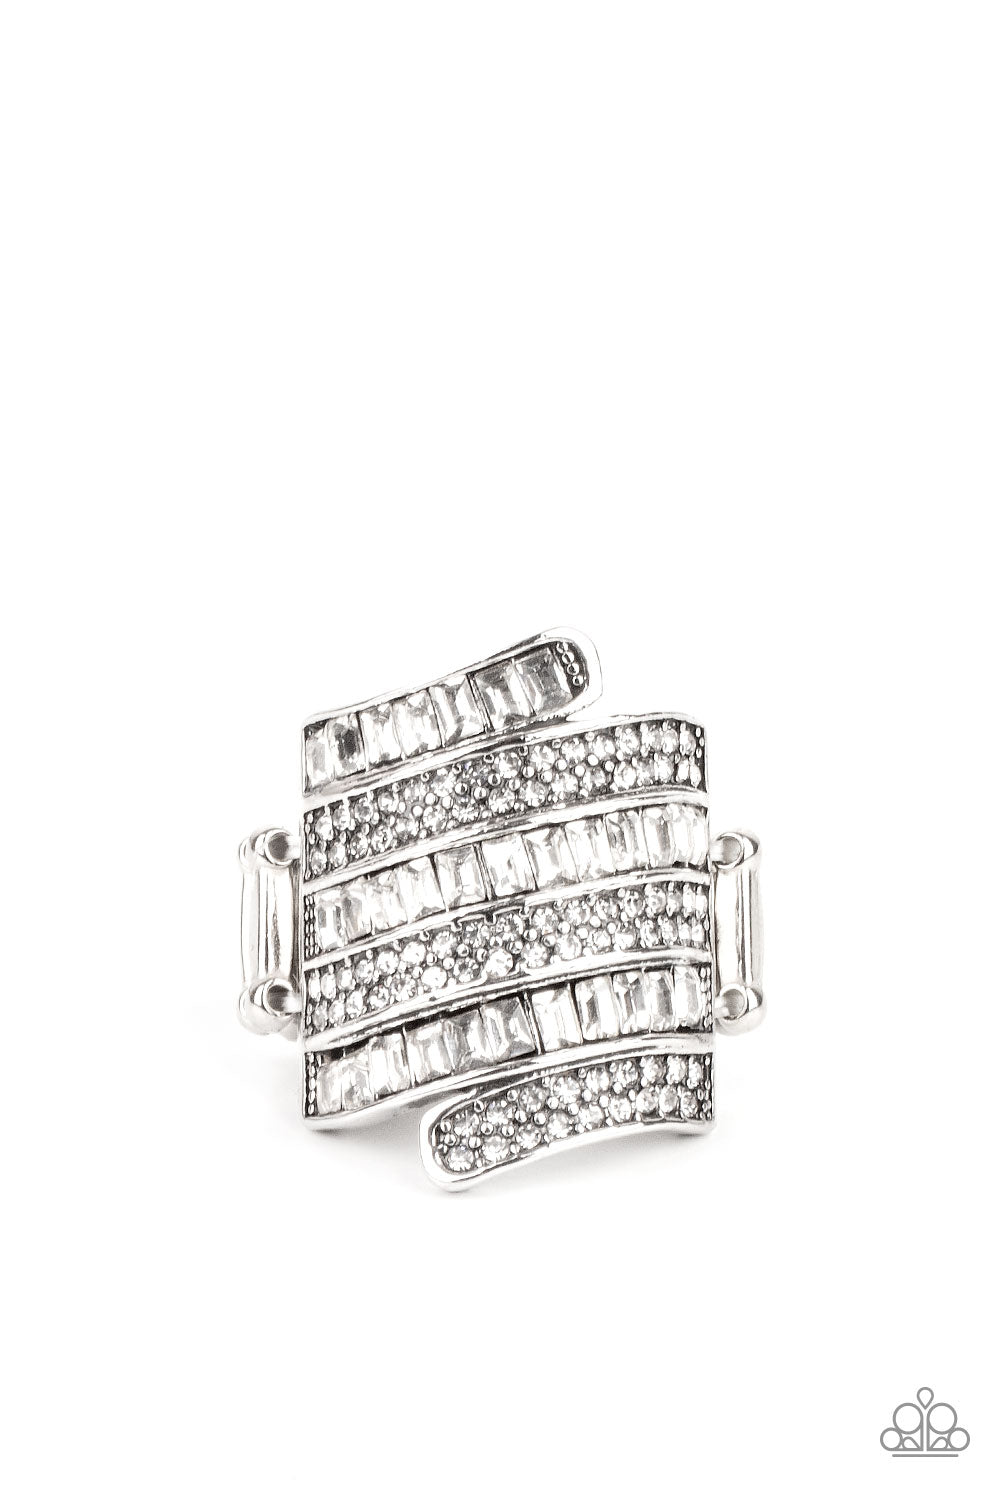 Ring with sparkly surface, half-hear contour, transparent zircons |  Jewellery Eshop EU